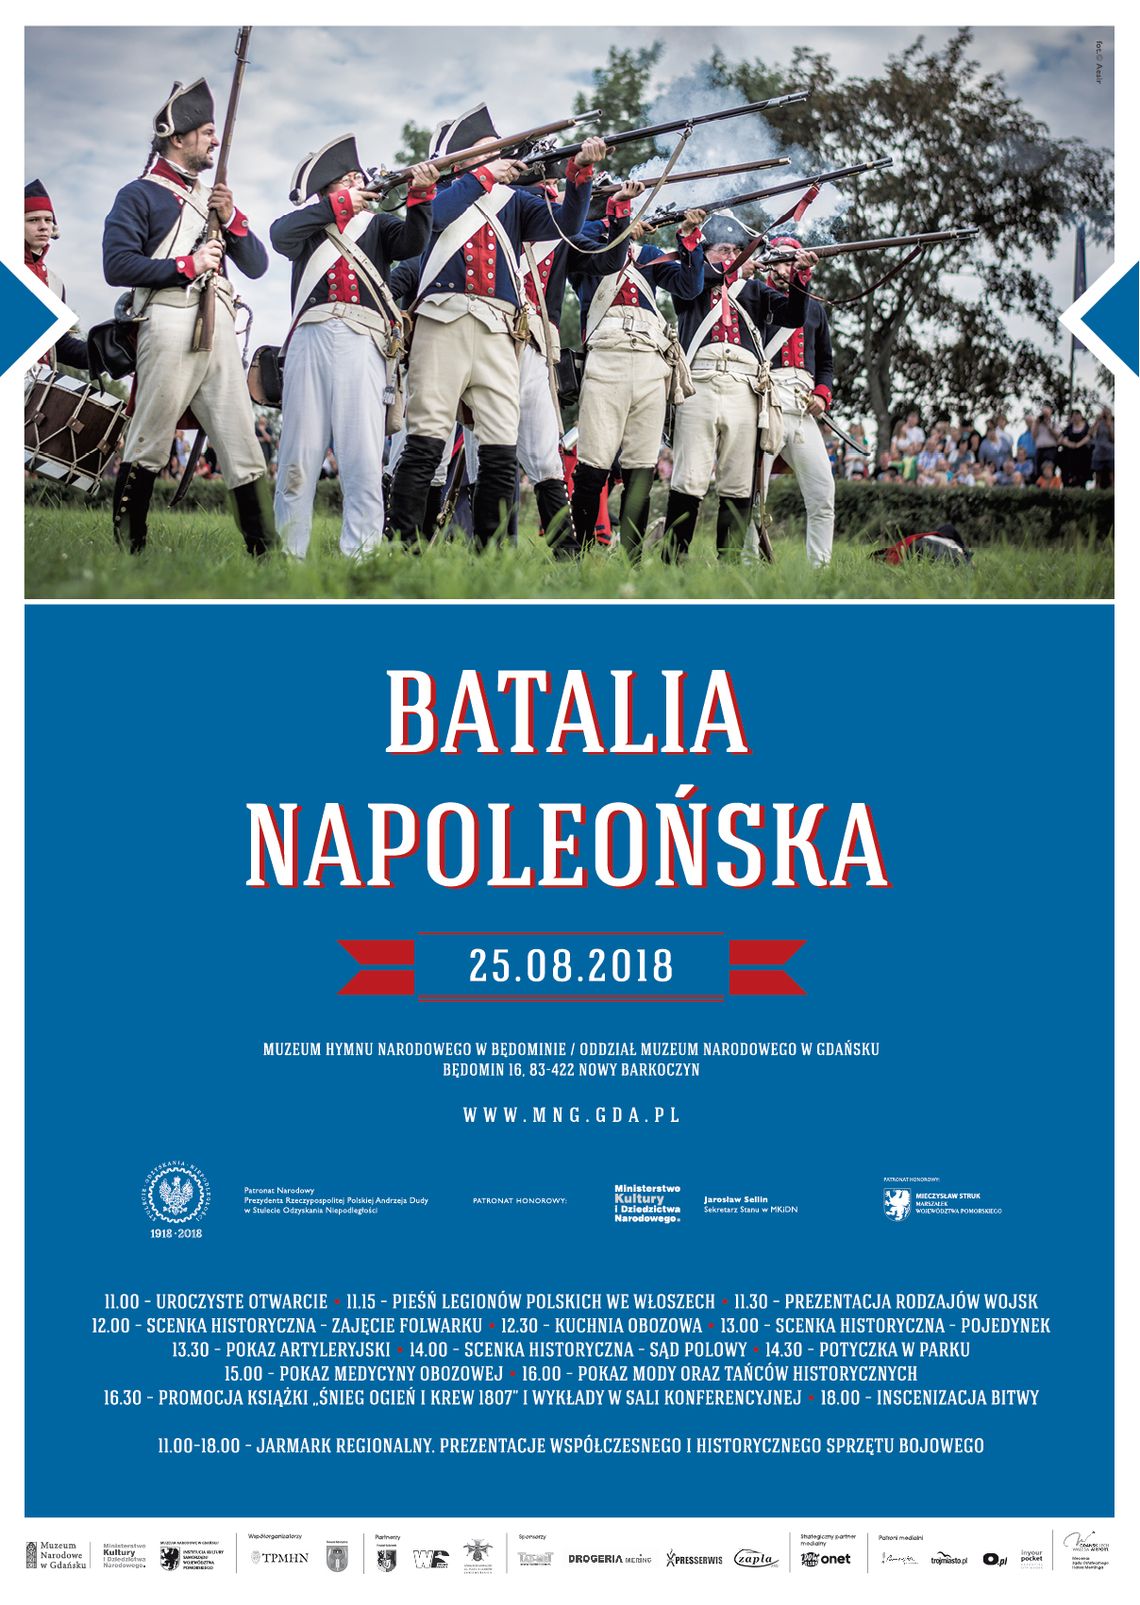 Batalia Napoleońska. Będomin 2018